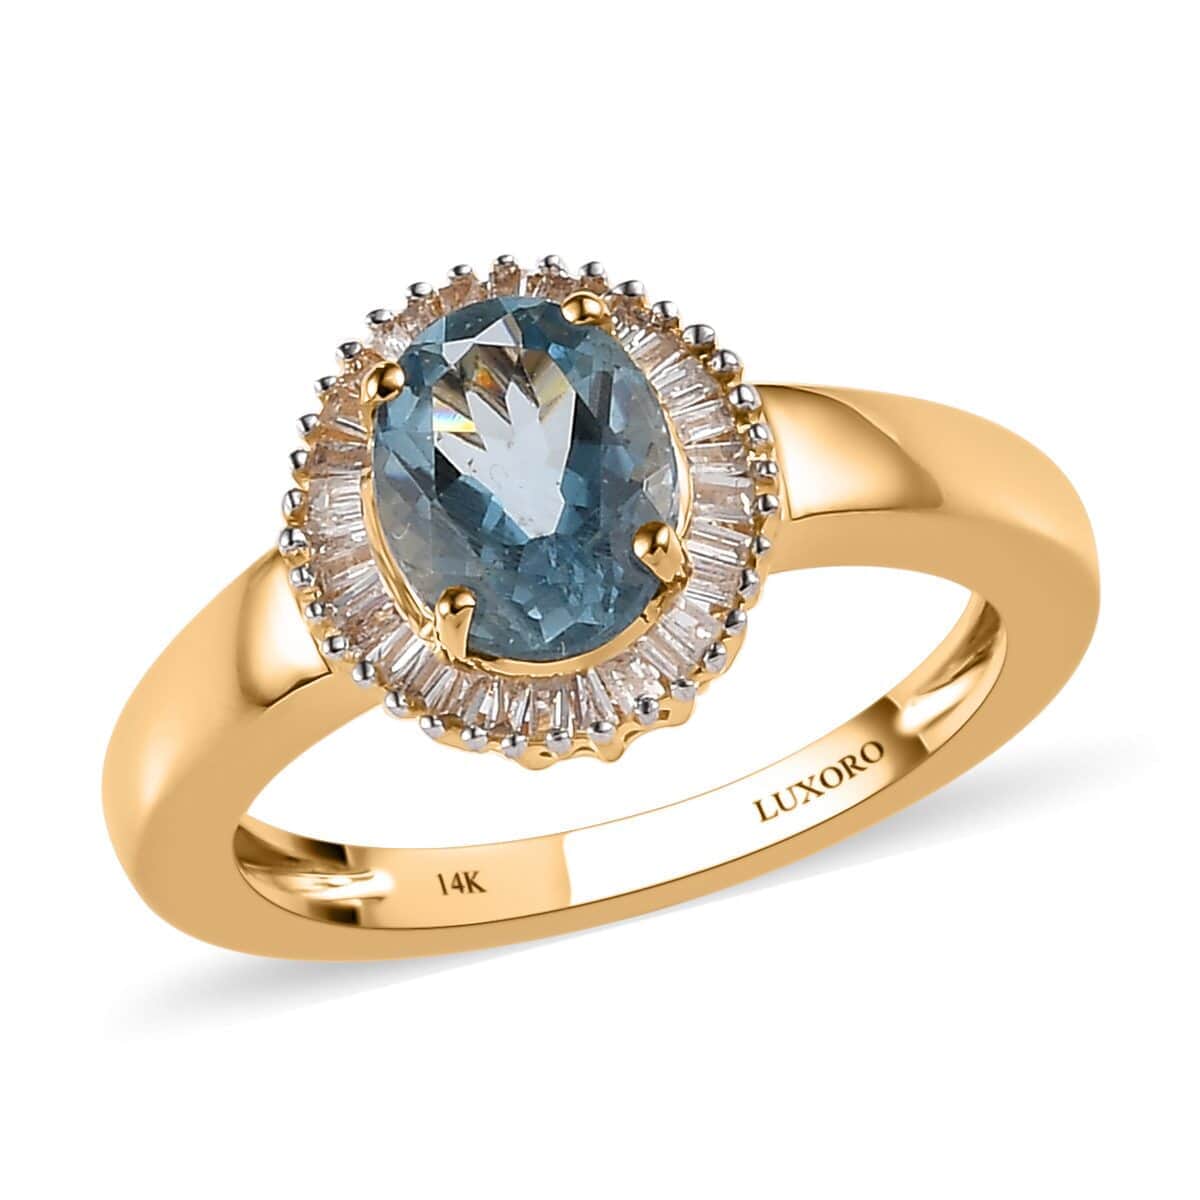 Luxoro 14K Yellow Gold AAA Santa Maria Aquamarine and G-H I2 Diamond Halo Ring (Size 6.0) 1.30 ctw image number 0